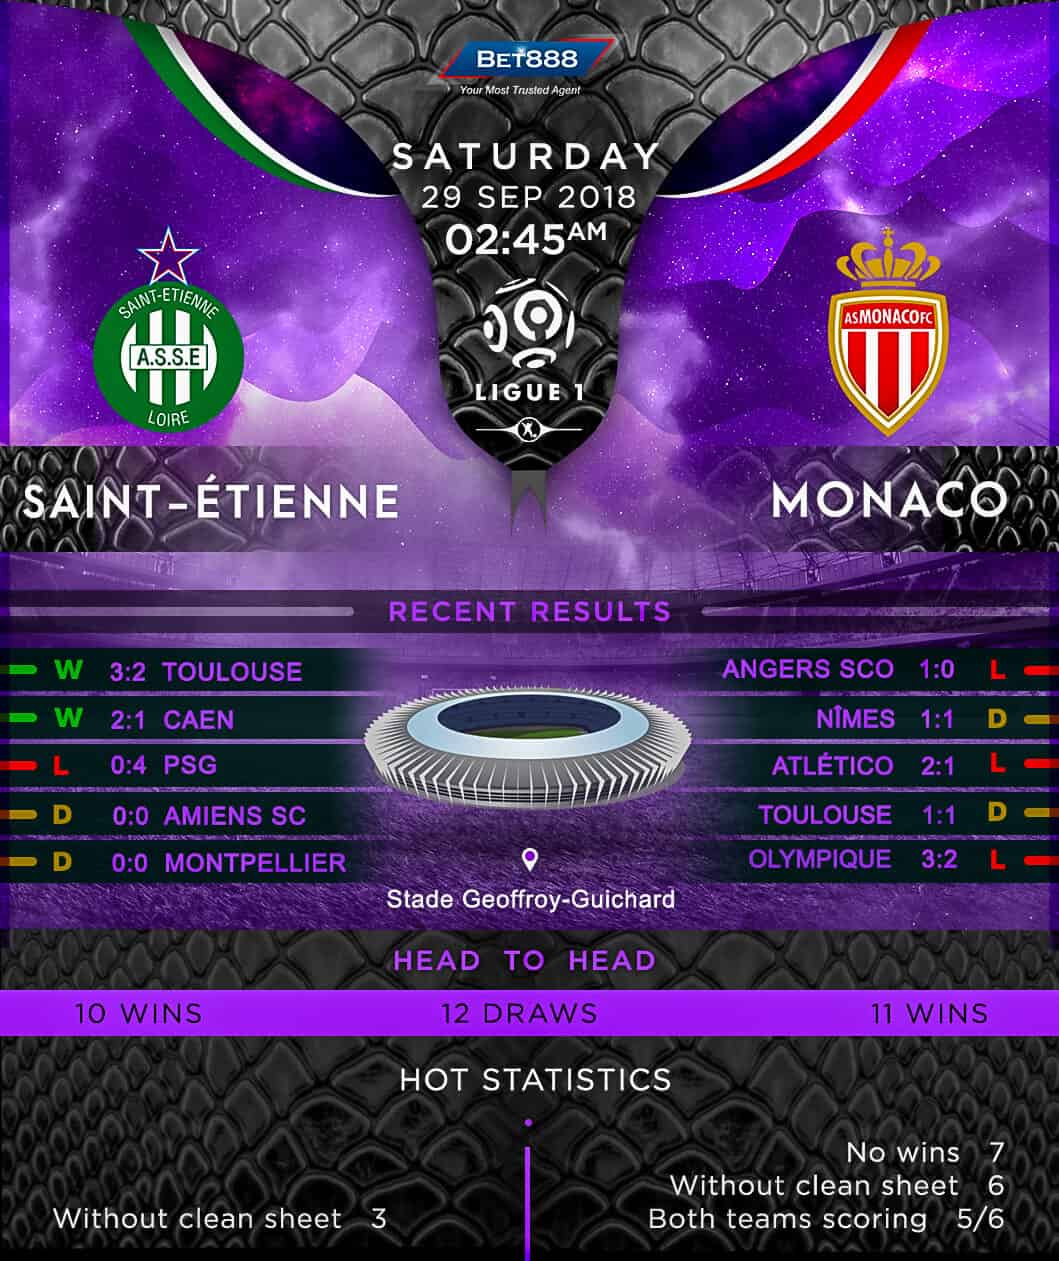 Saint-Etienne vs Monaco 29/09/18